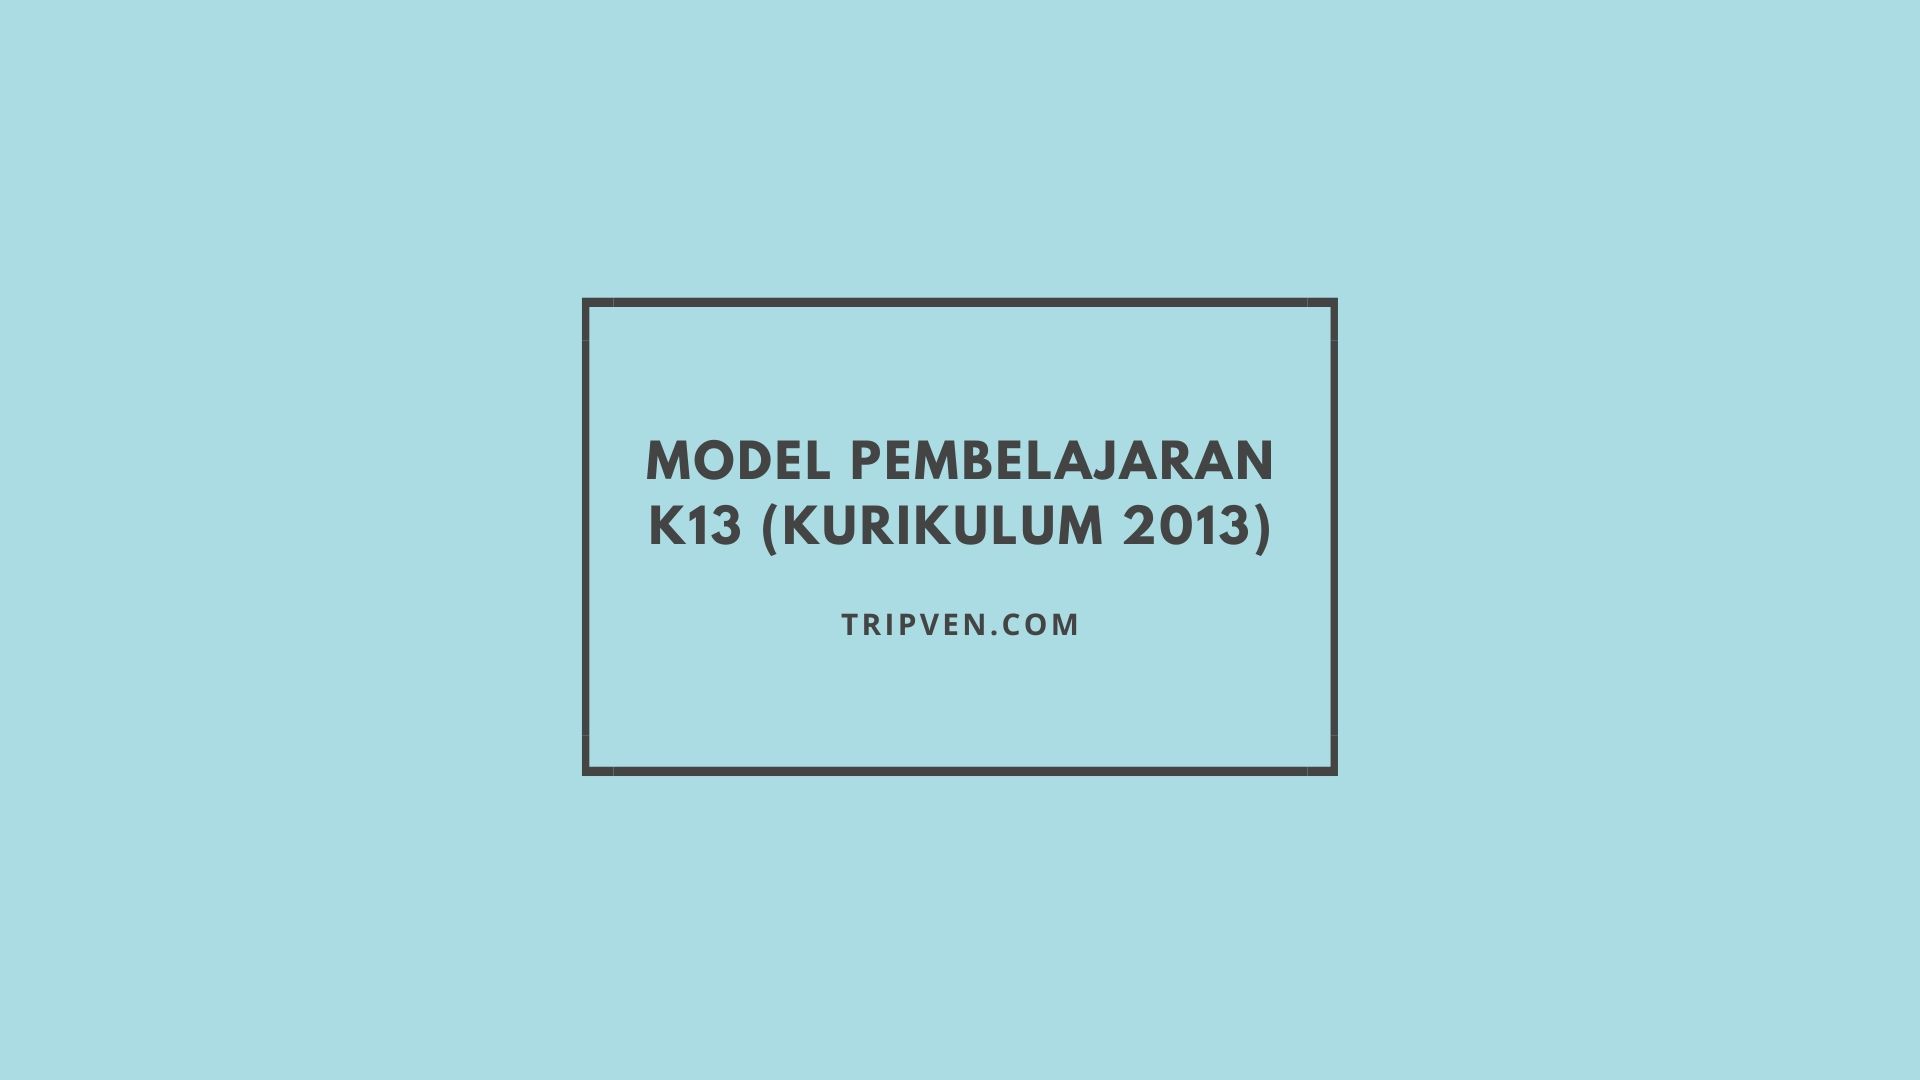 Model Pembelajaran K13 (Kurikulum 2013) dan Revisi